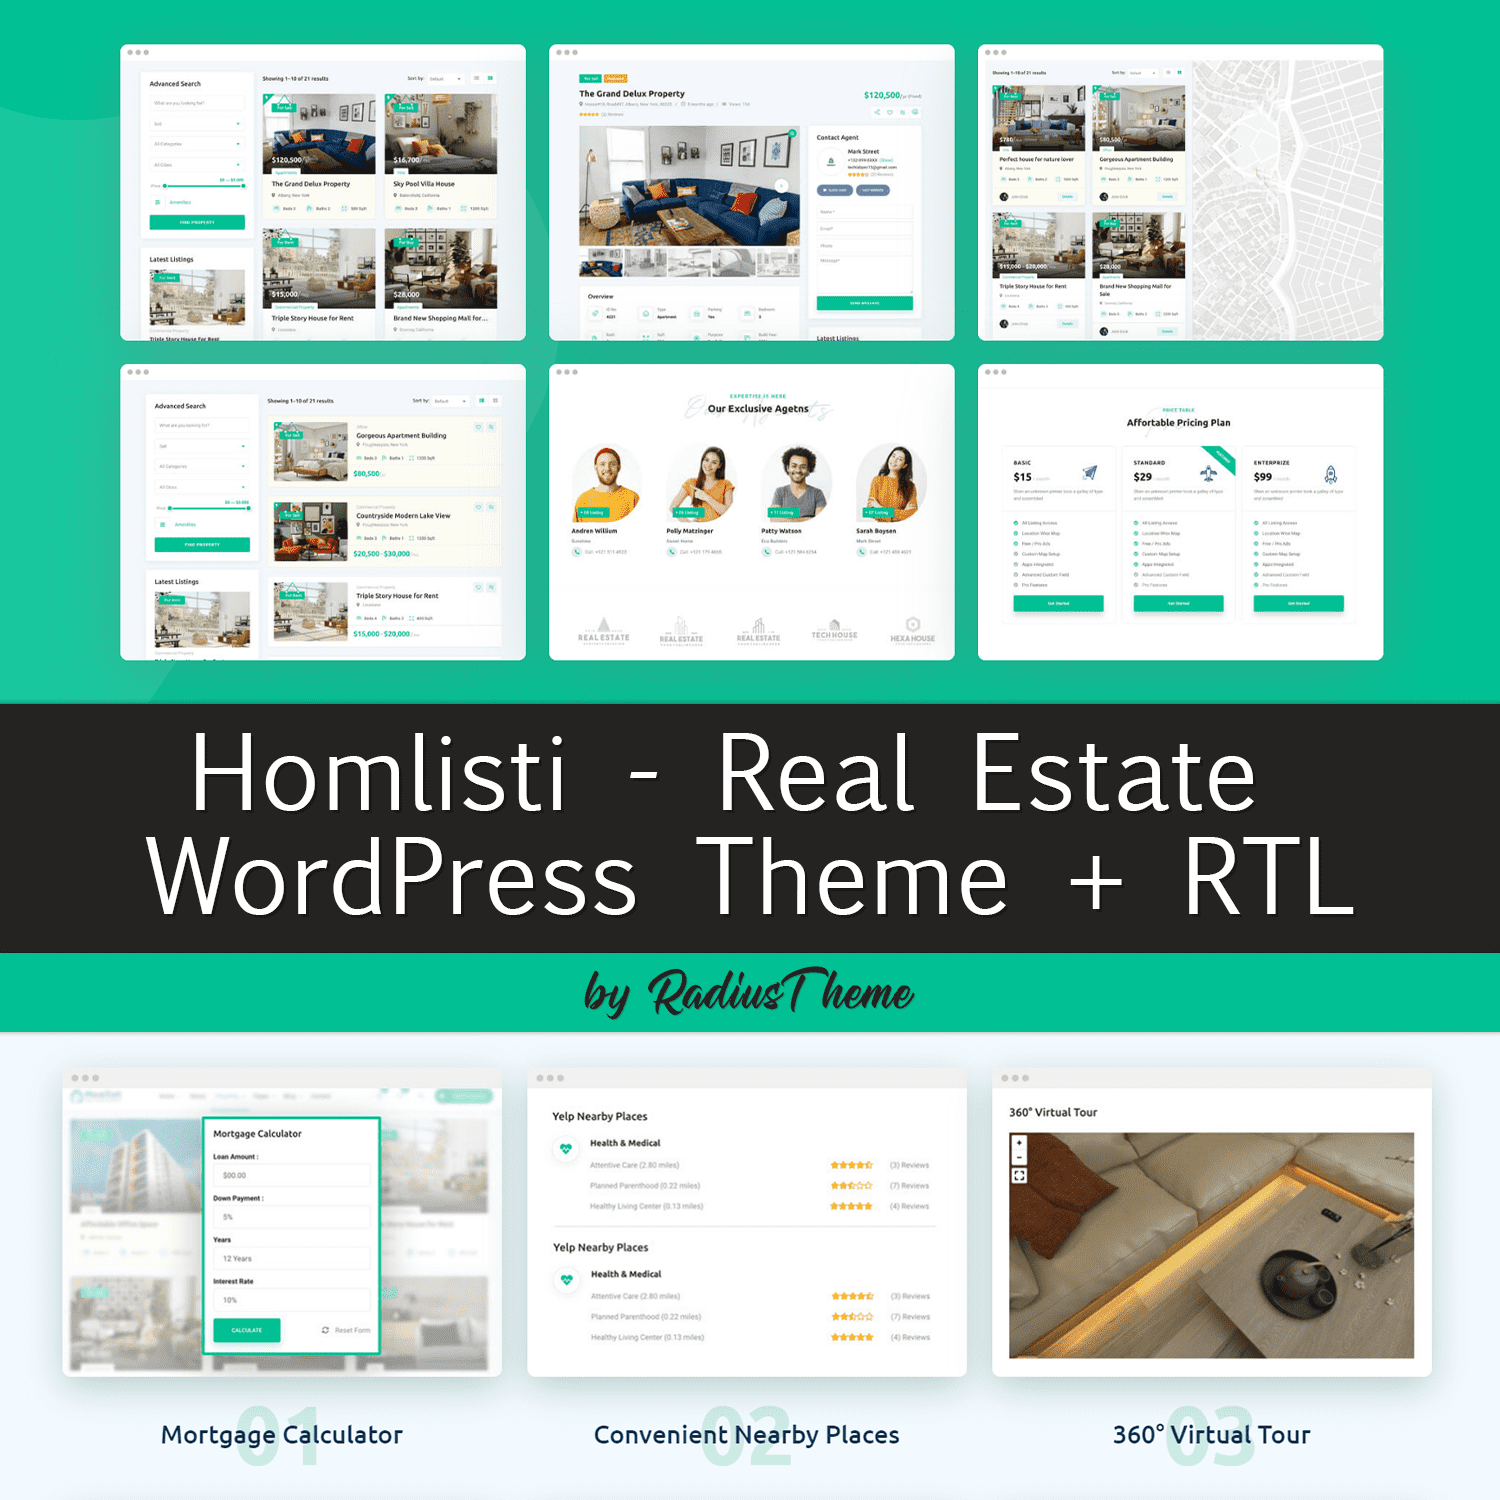 Homlisti – Real Estate WordPress Theme + RTL cover.